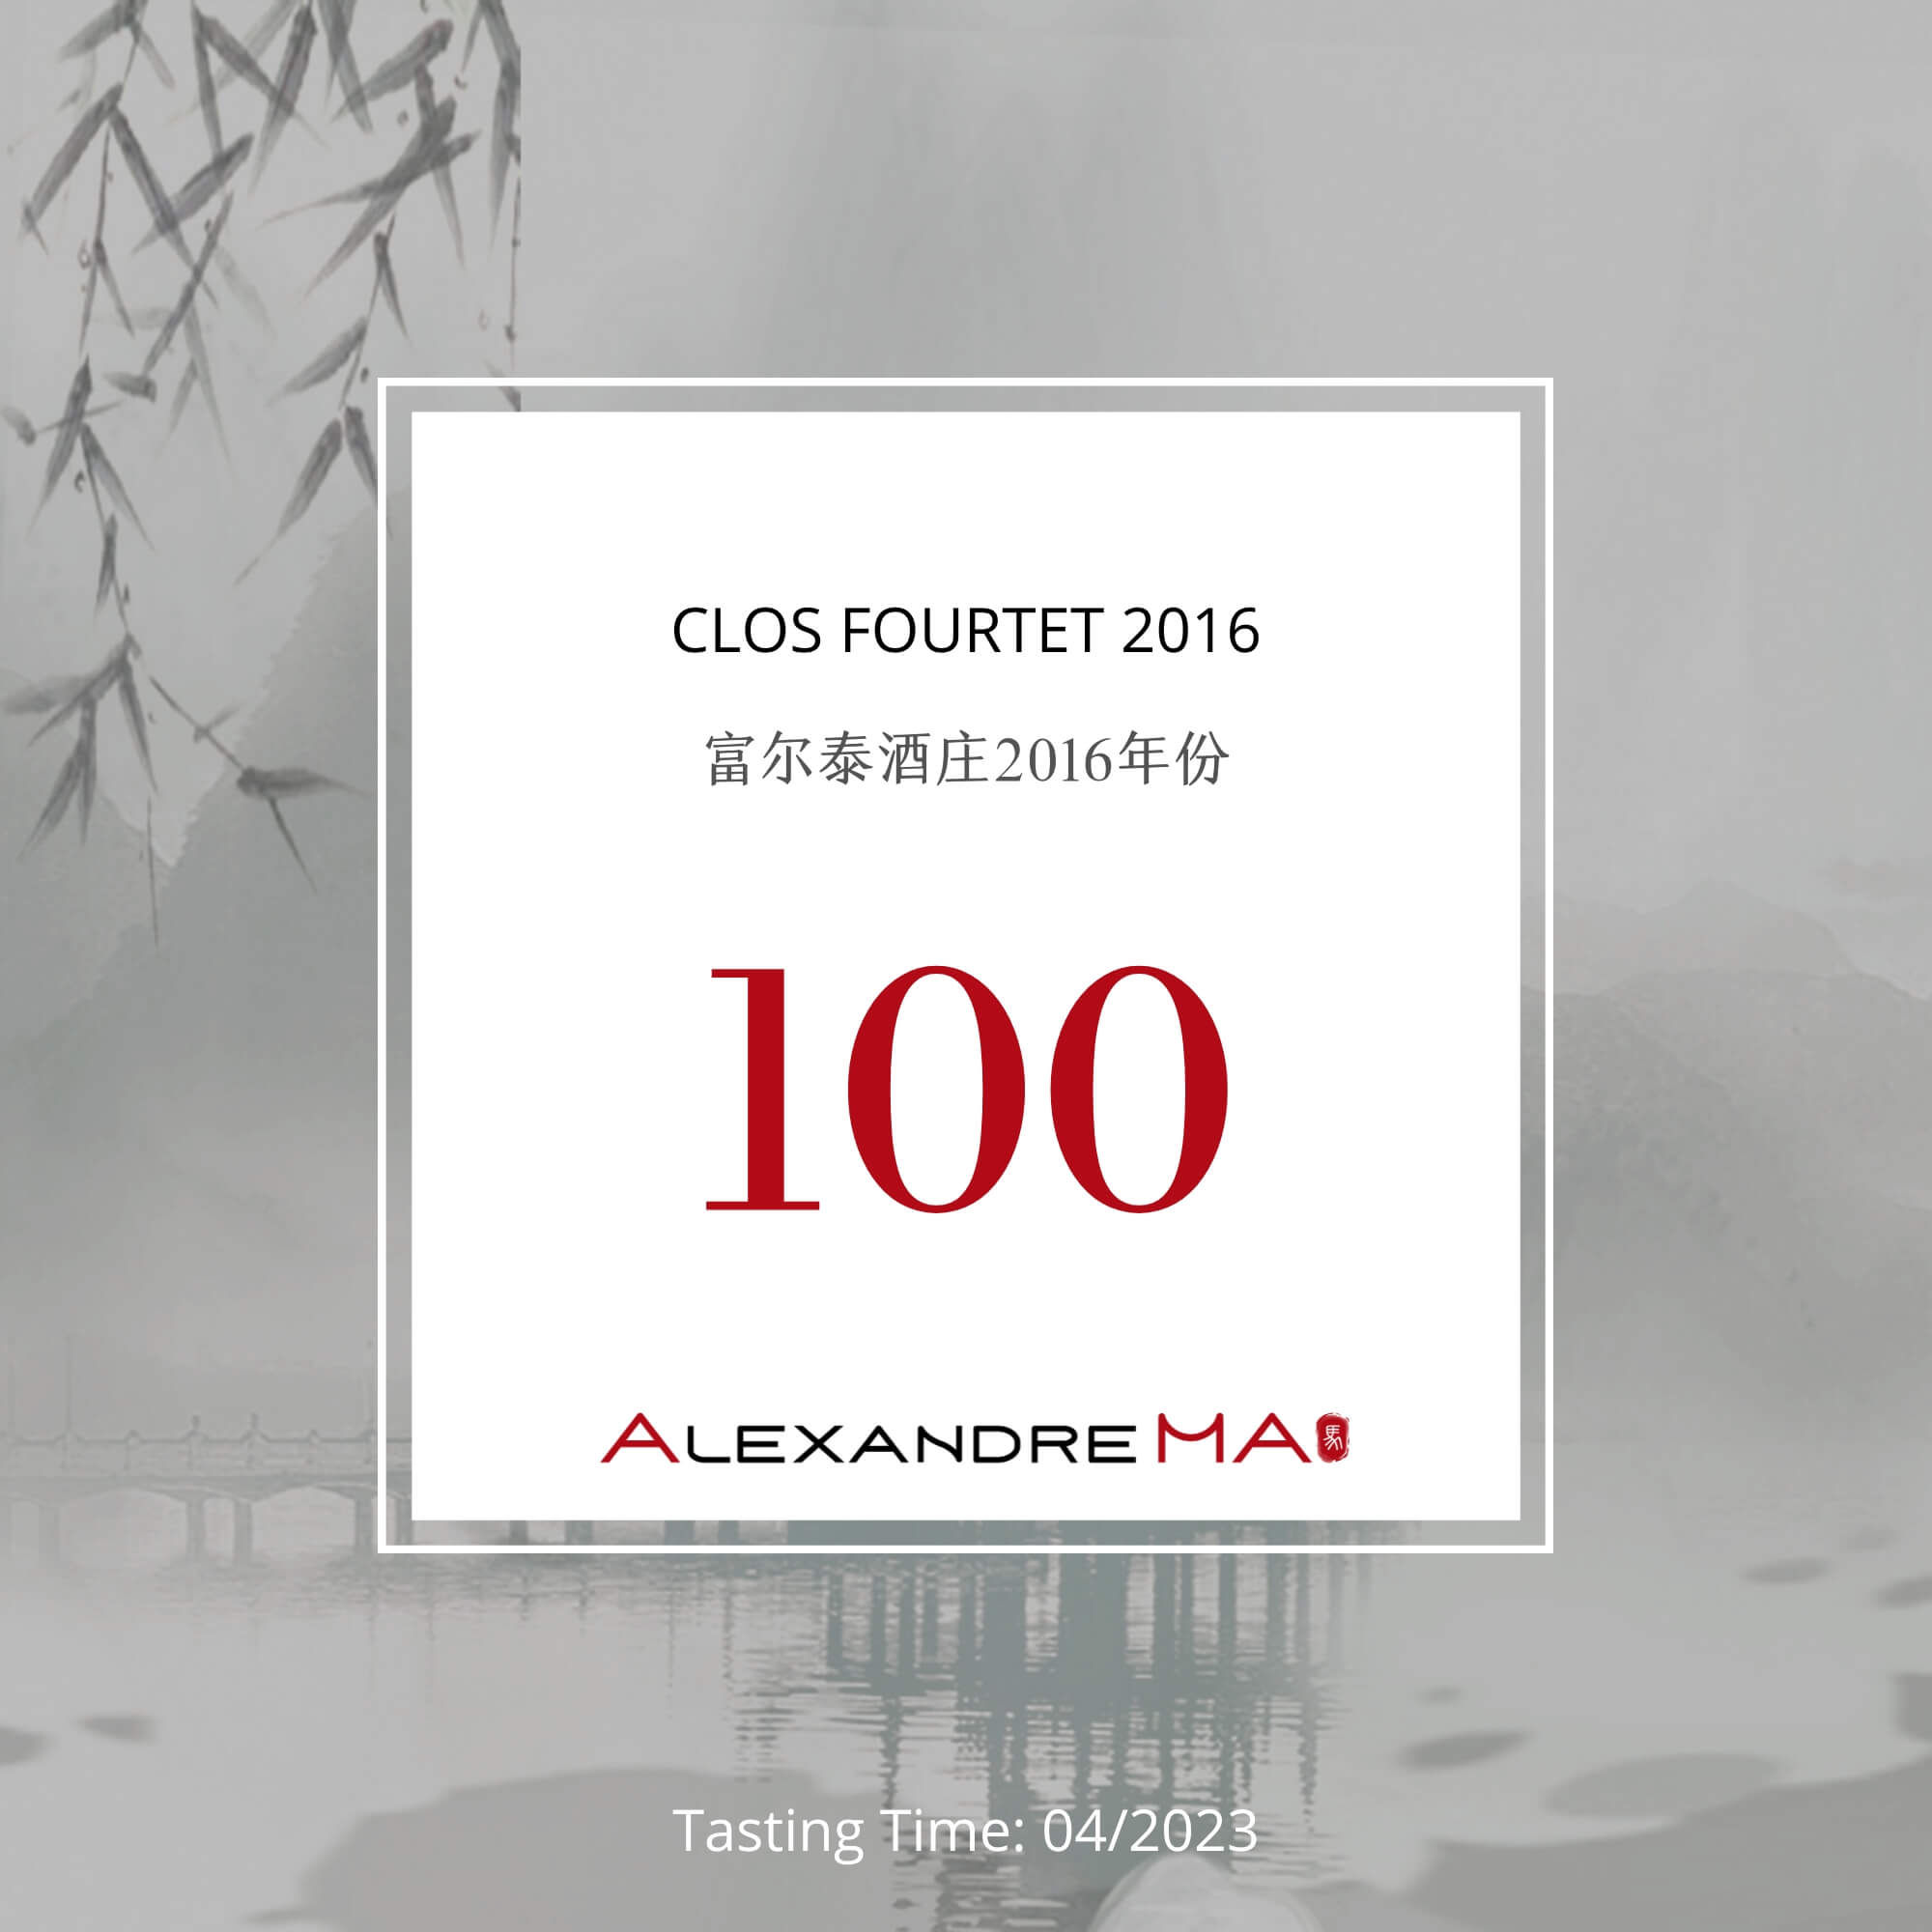 Clos Fourtet 2016 富尔泰酒庄 - Alexandre Ma